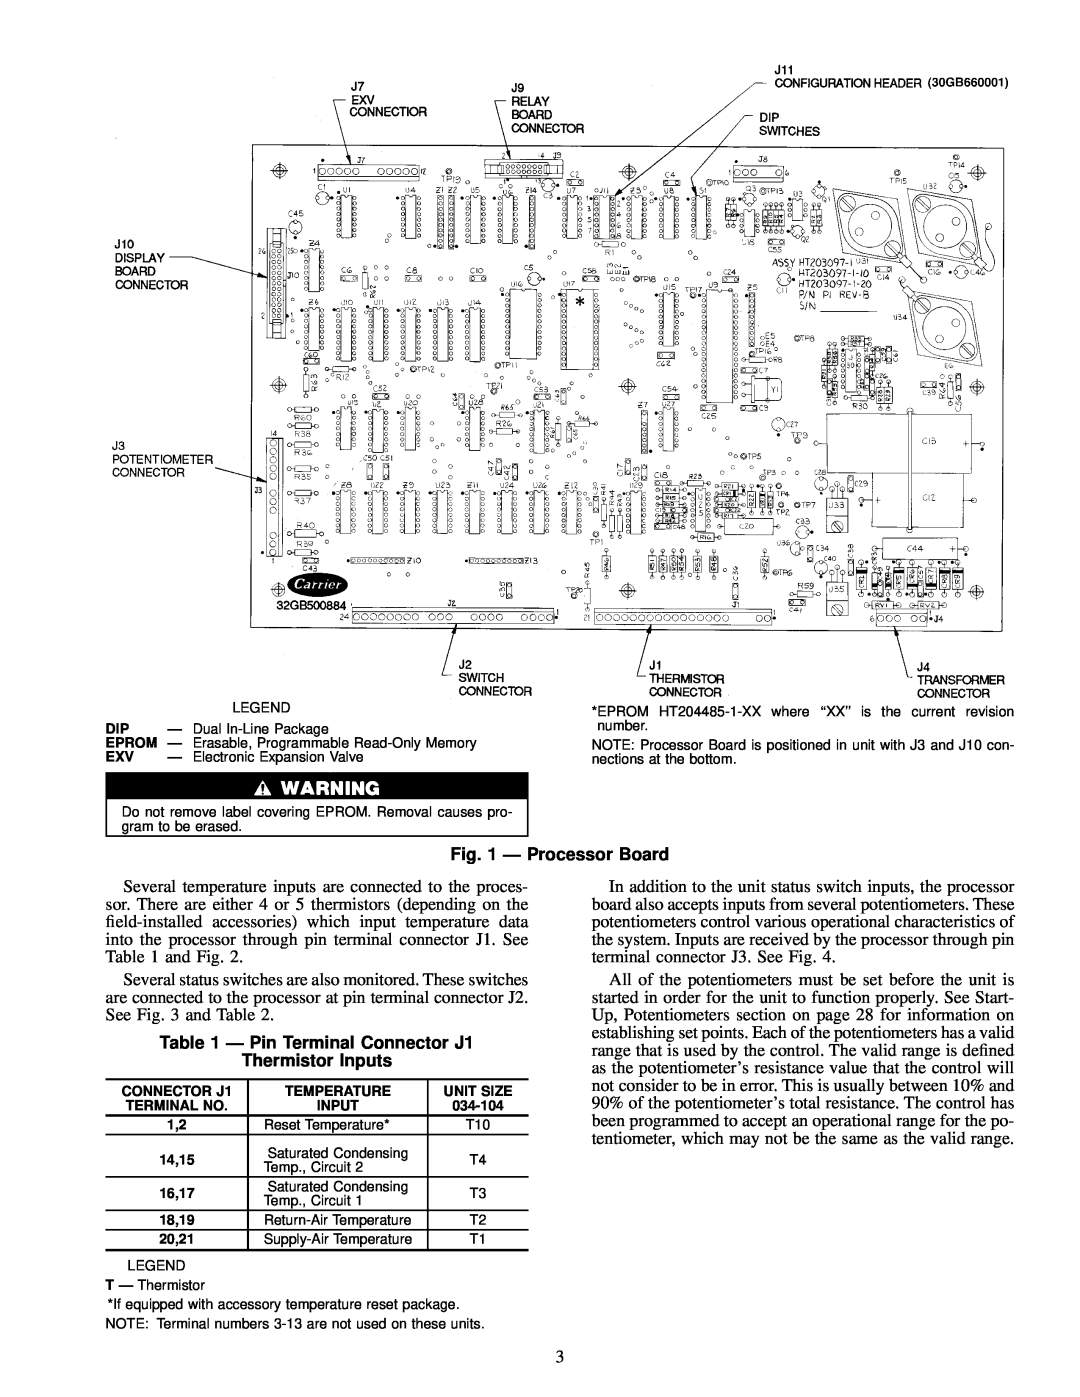 Carrier JK034-074, 50FK, 48FK Ð Processor Board, Ð Pin Terminal Connector J1 Thermistor Inputs, Return-Air Temperature 